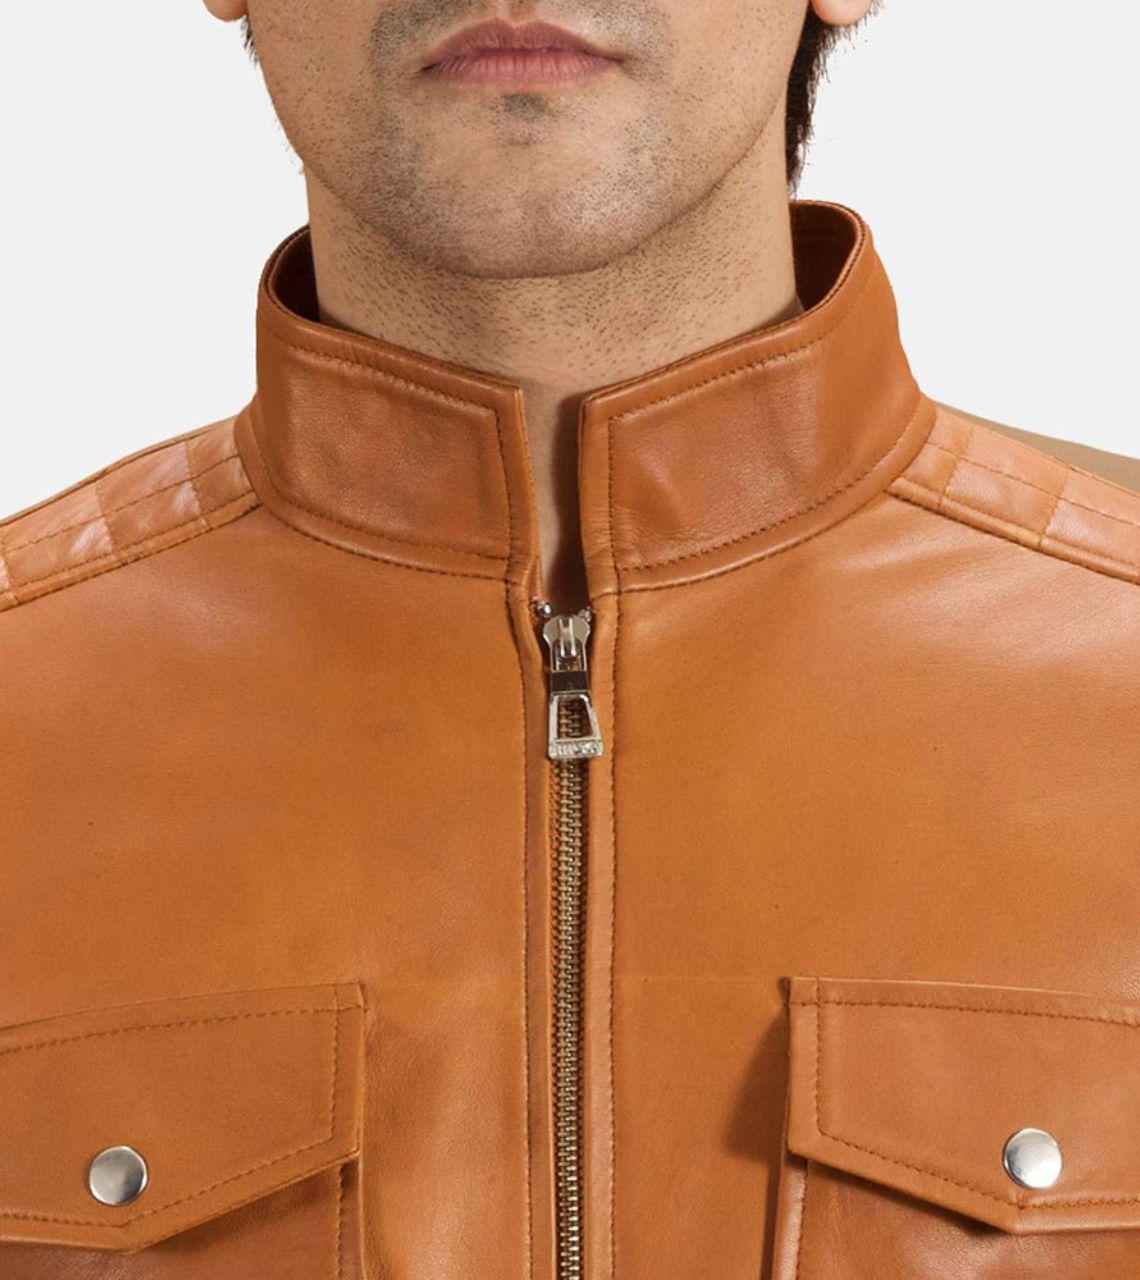 Tanned Brown Biker Leather Jacket For Men's